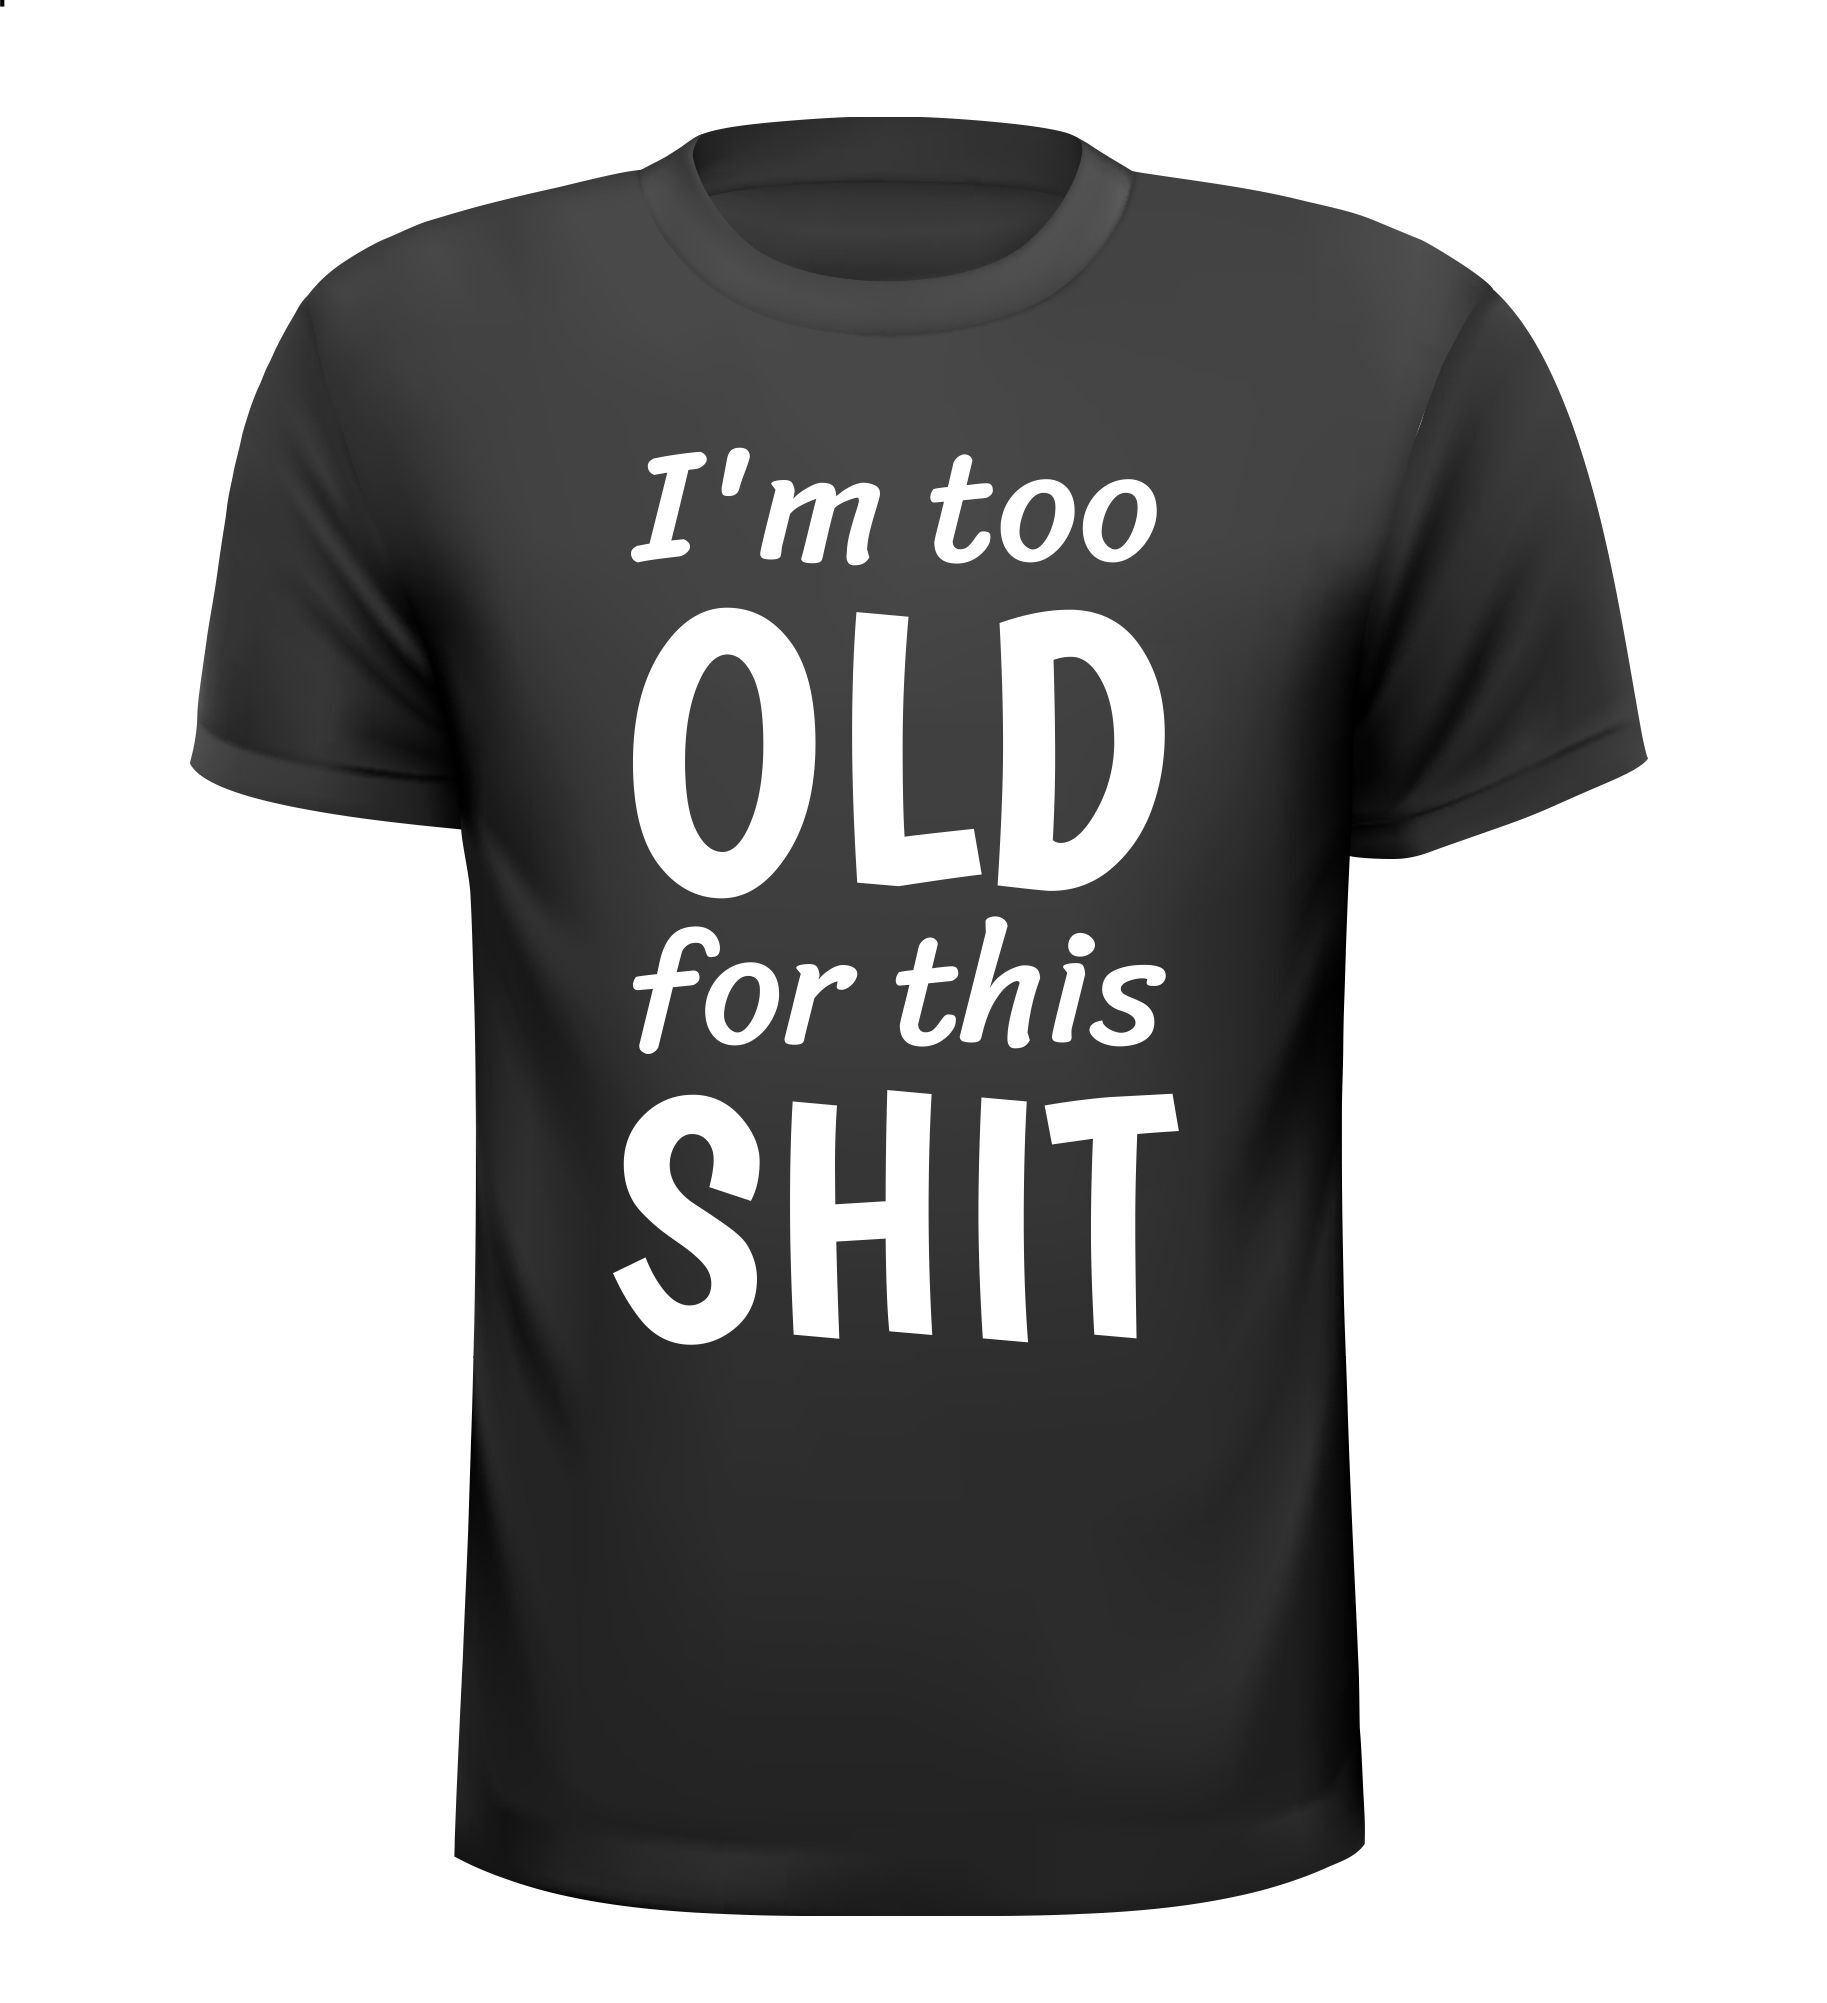 Shirtje i'm too old for this shit te oud grappig verjaardag T-shirt leuk verjaardagsshirt